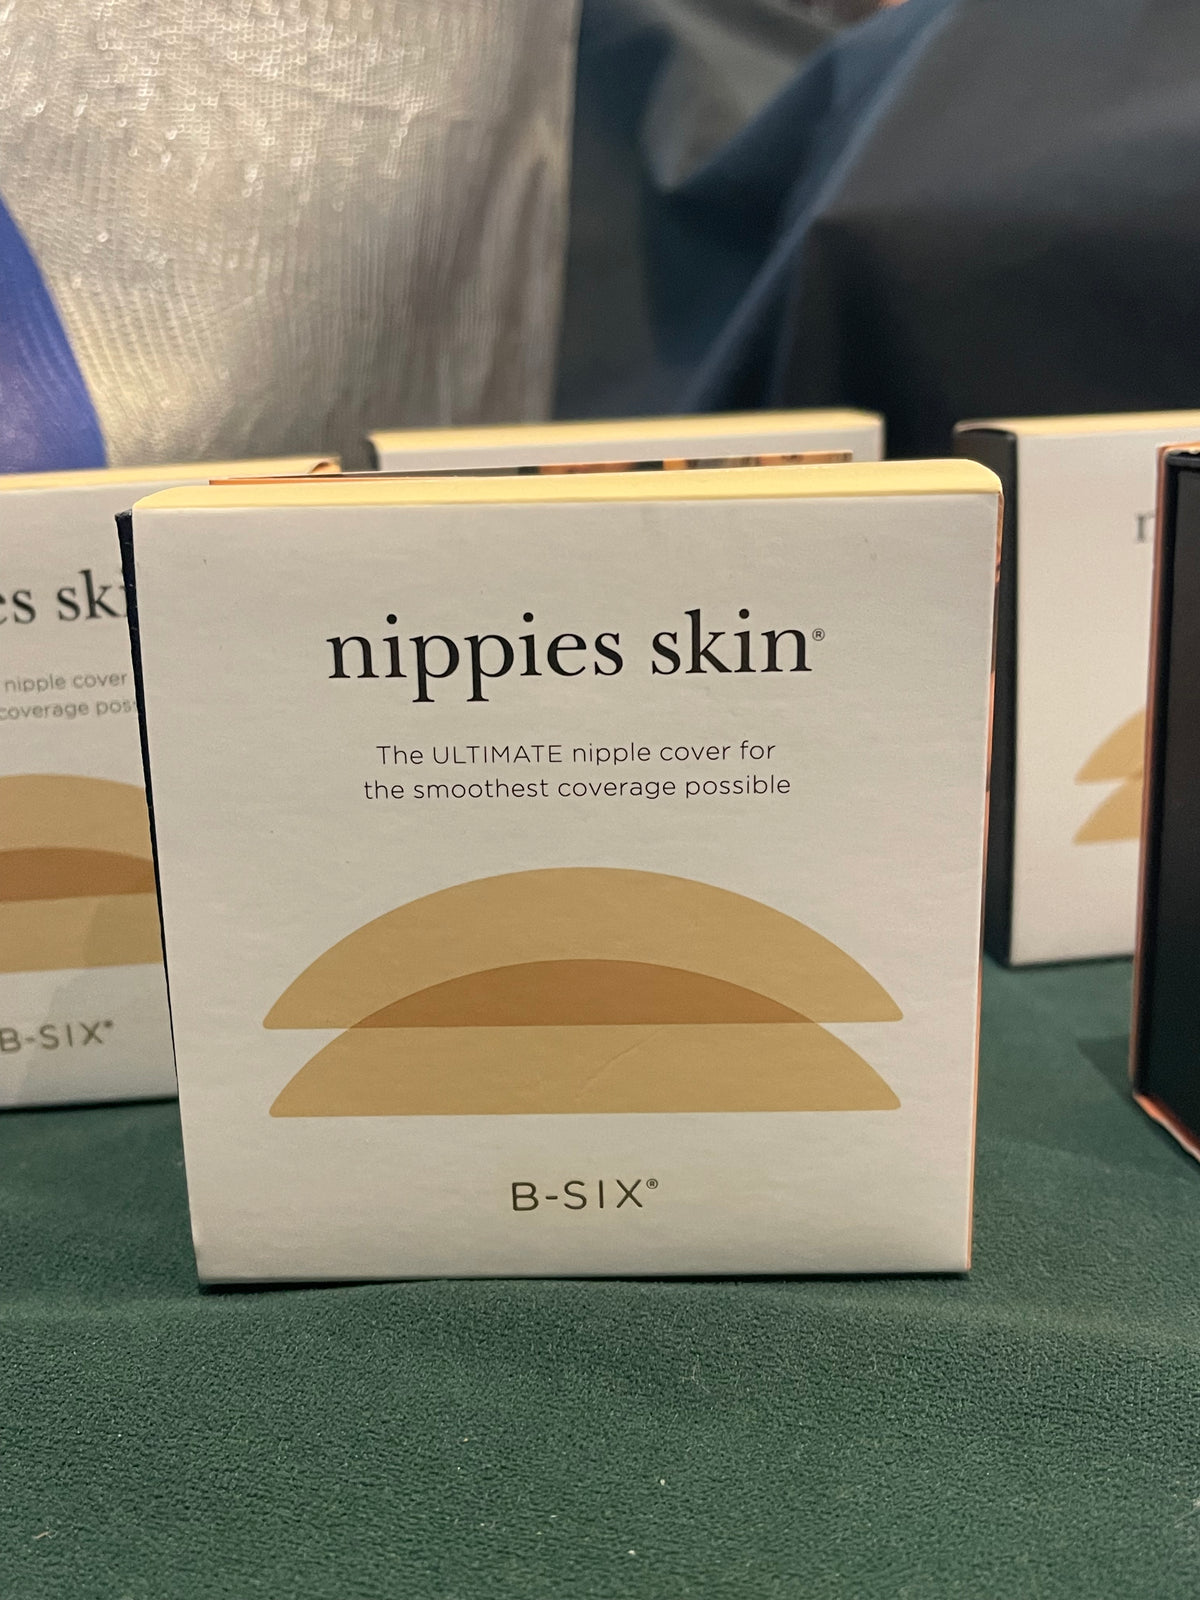 Nippies skin